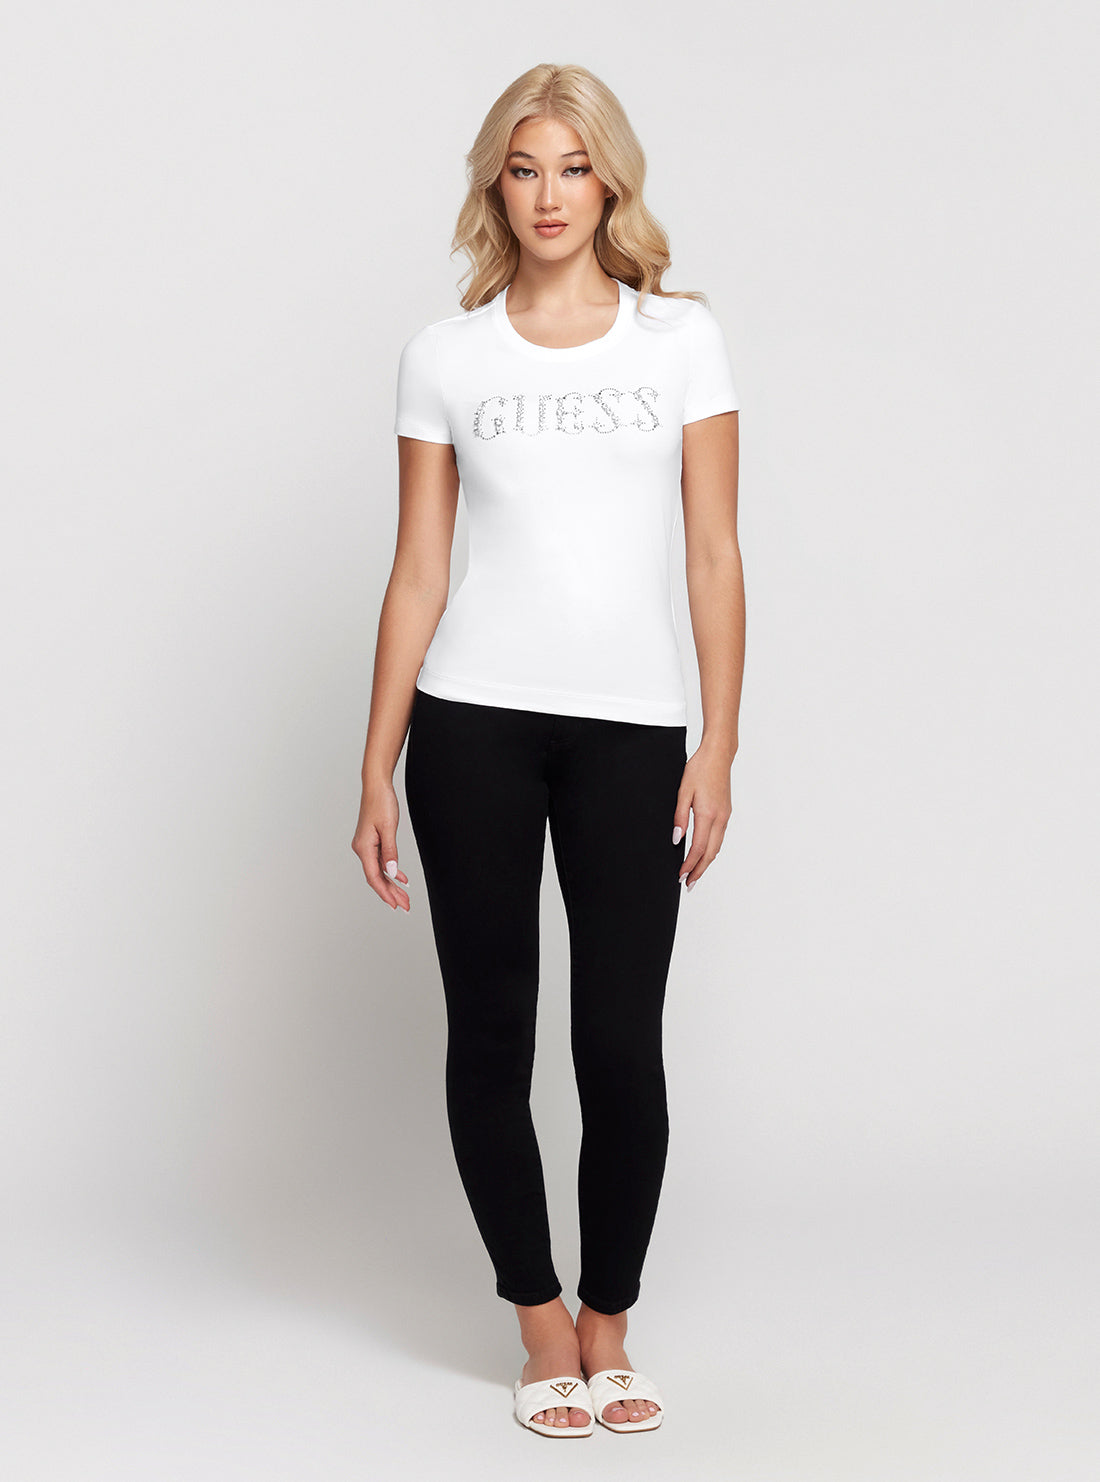 GUESS White Short Sleeve Stones Logo T-Shirt full view